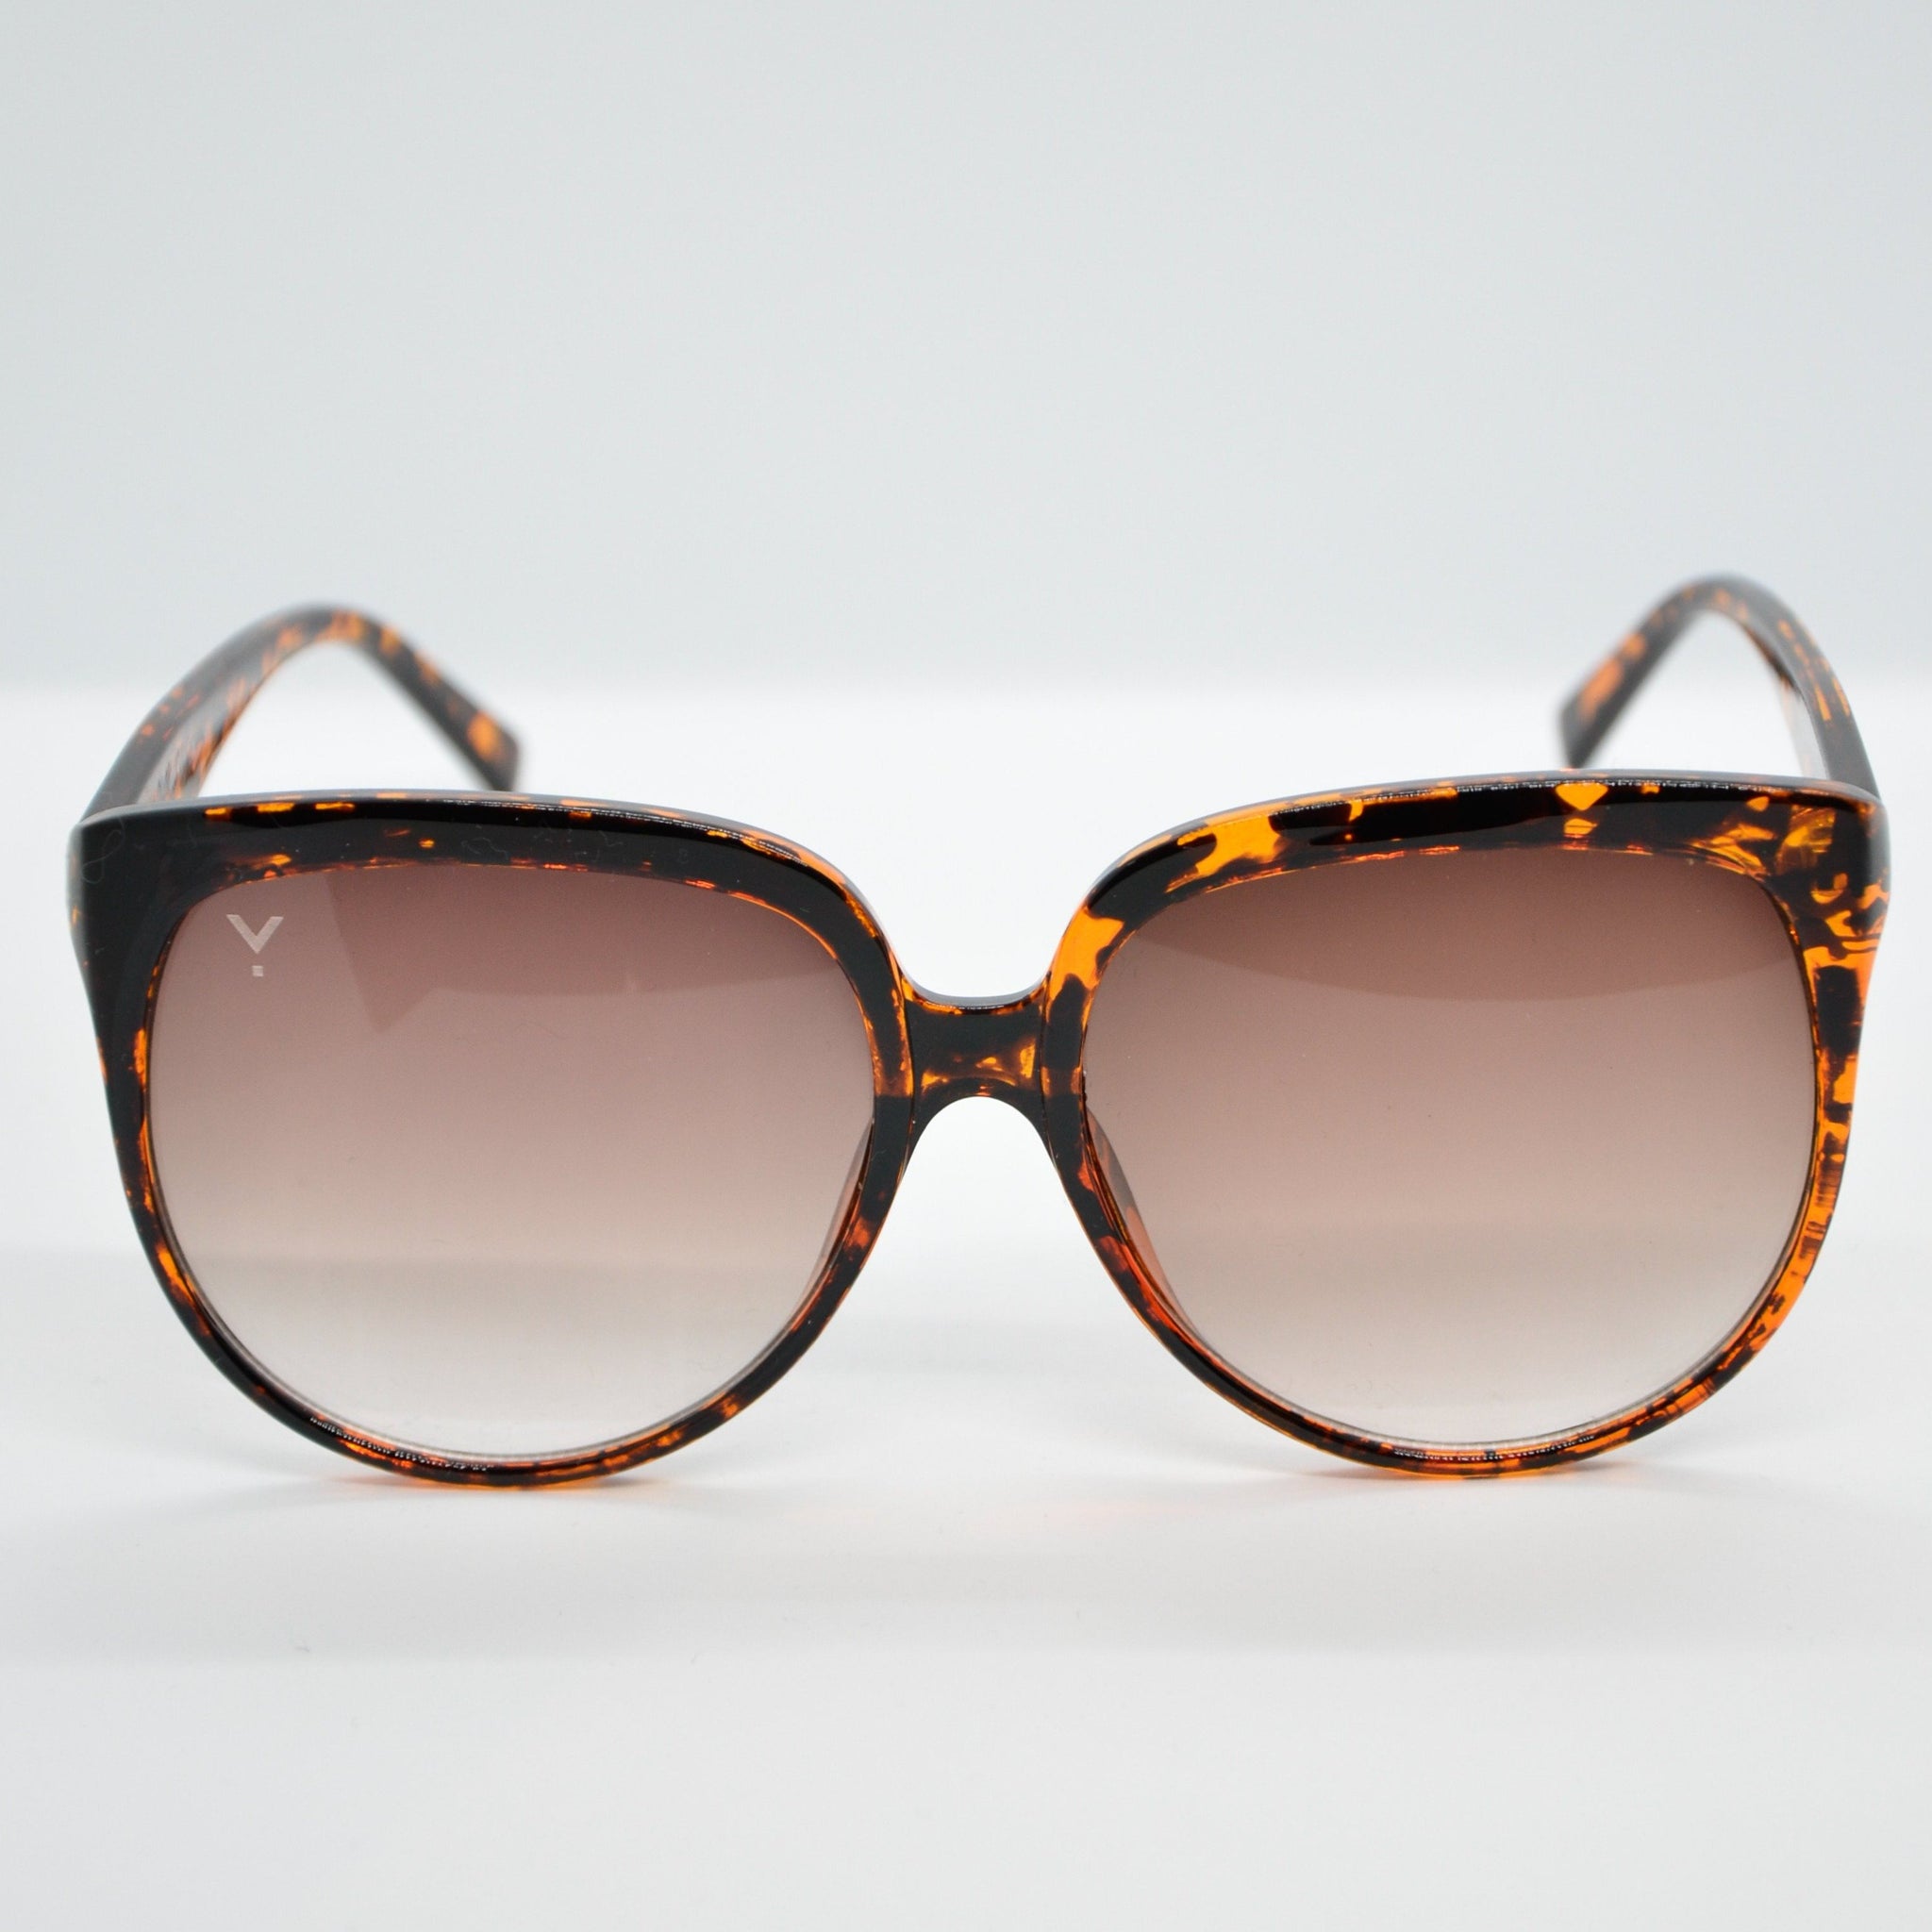 Fusion - Sunglasses | AVAYOS